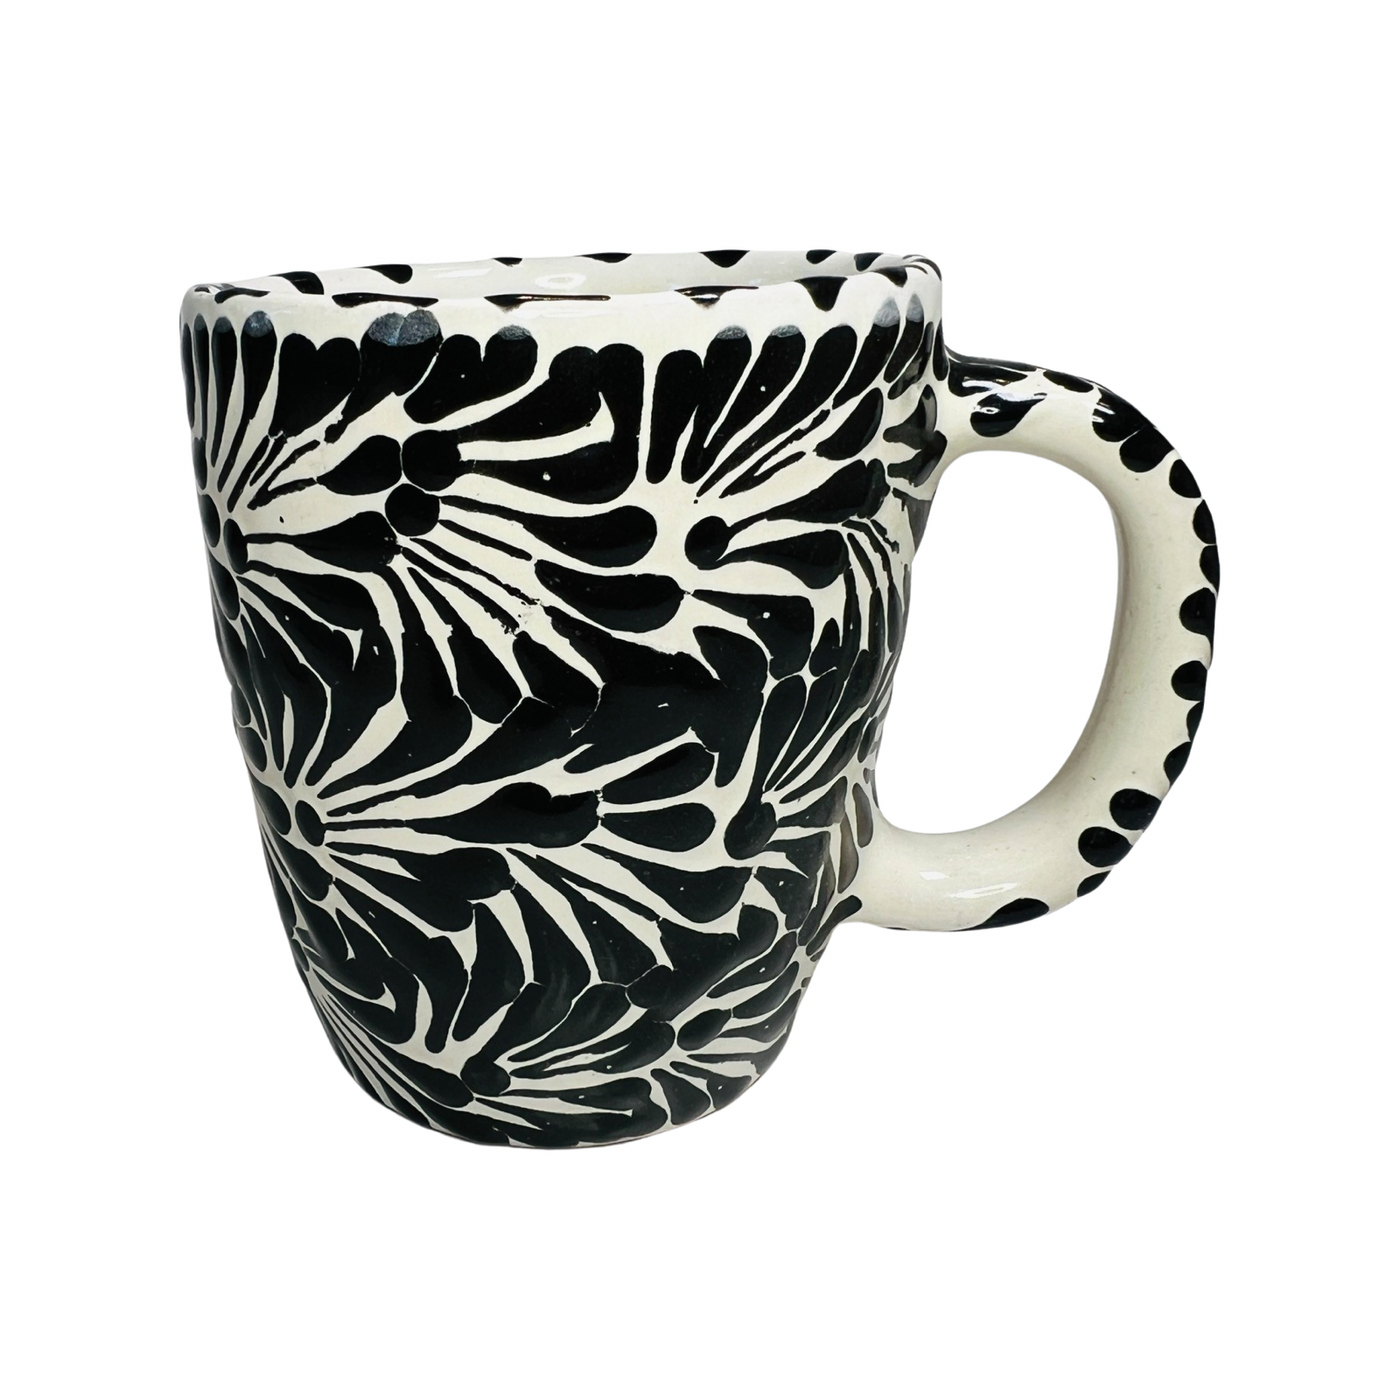 white and black talavera designed mug